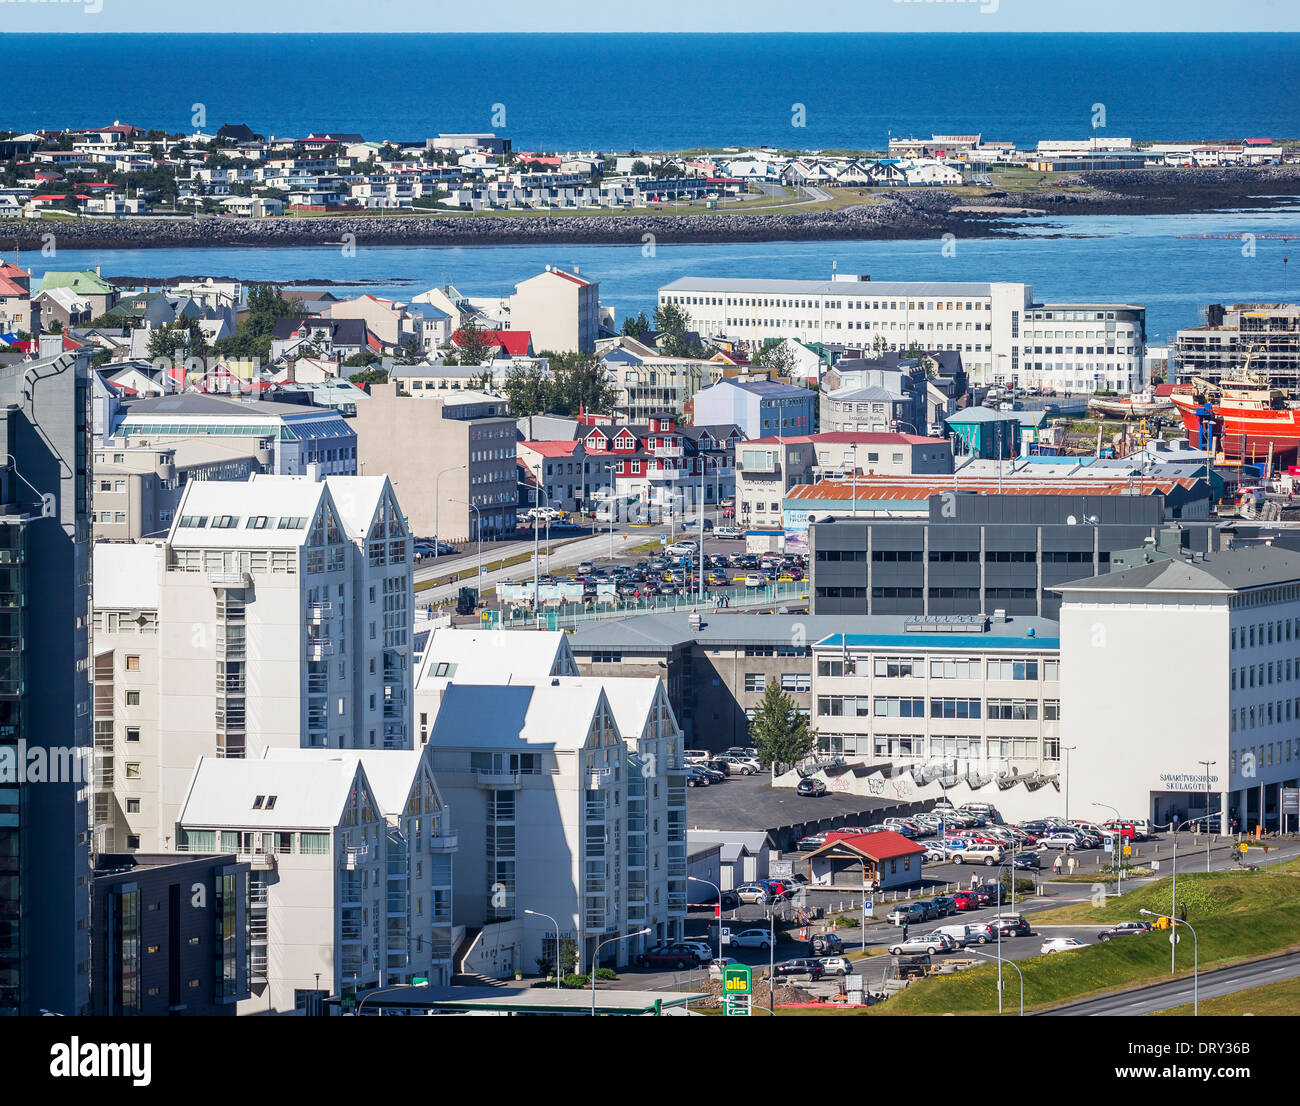 Buildings in Reykjavik, Iceland Stock Photo